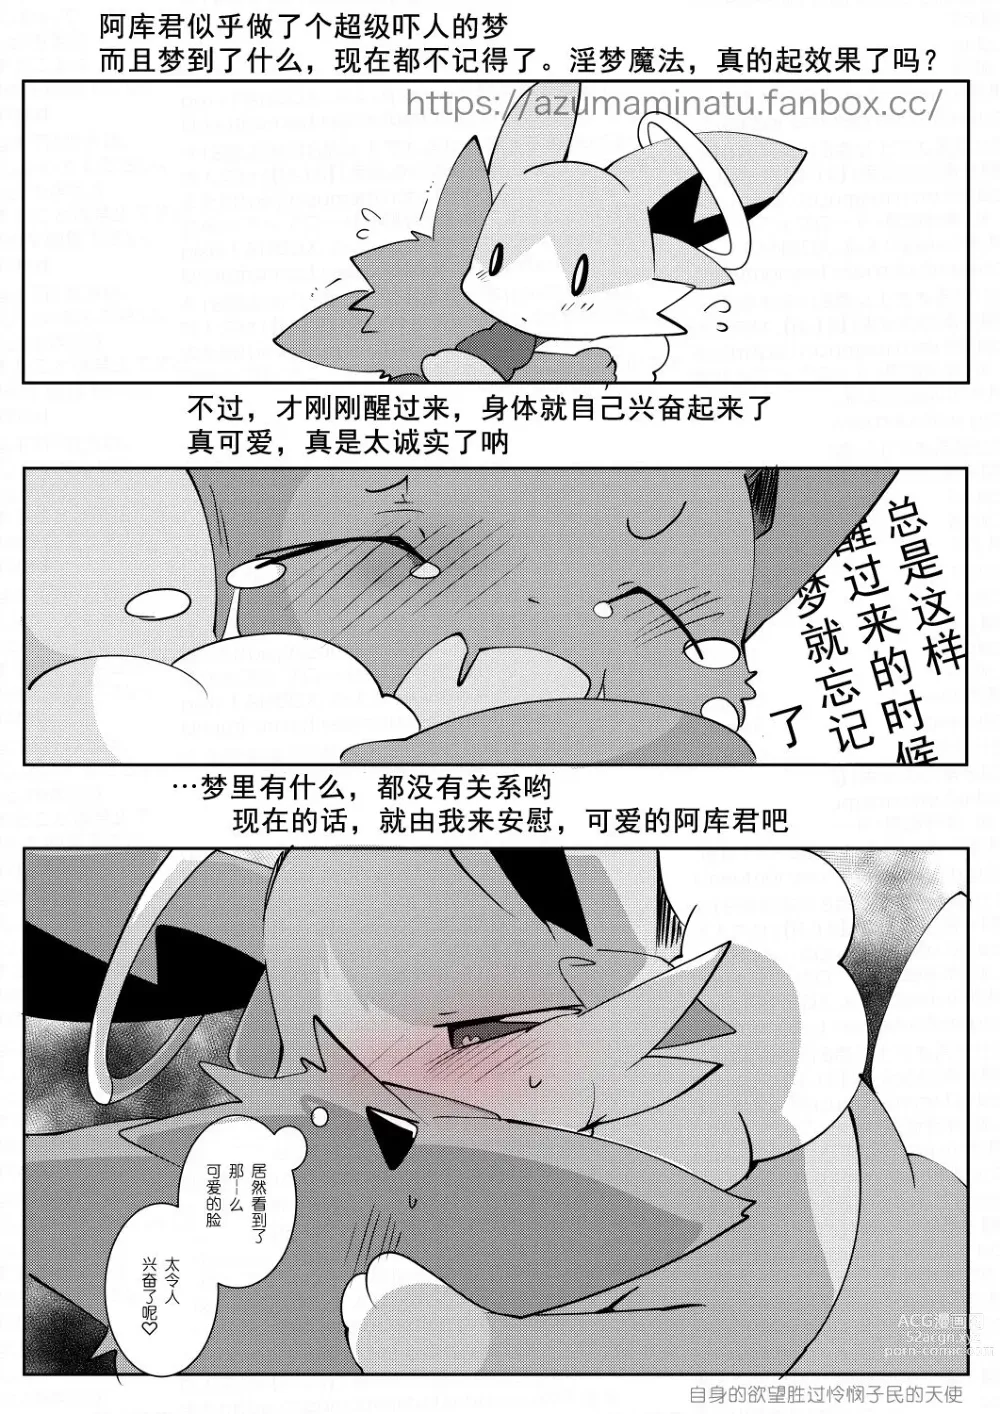 Page 1 of doujinshi 【Rｰ18】目が覚めたアクサン様の後日談